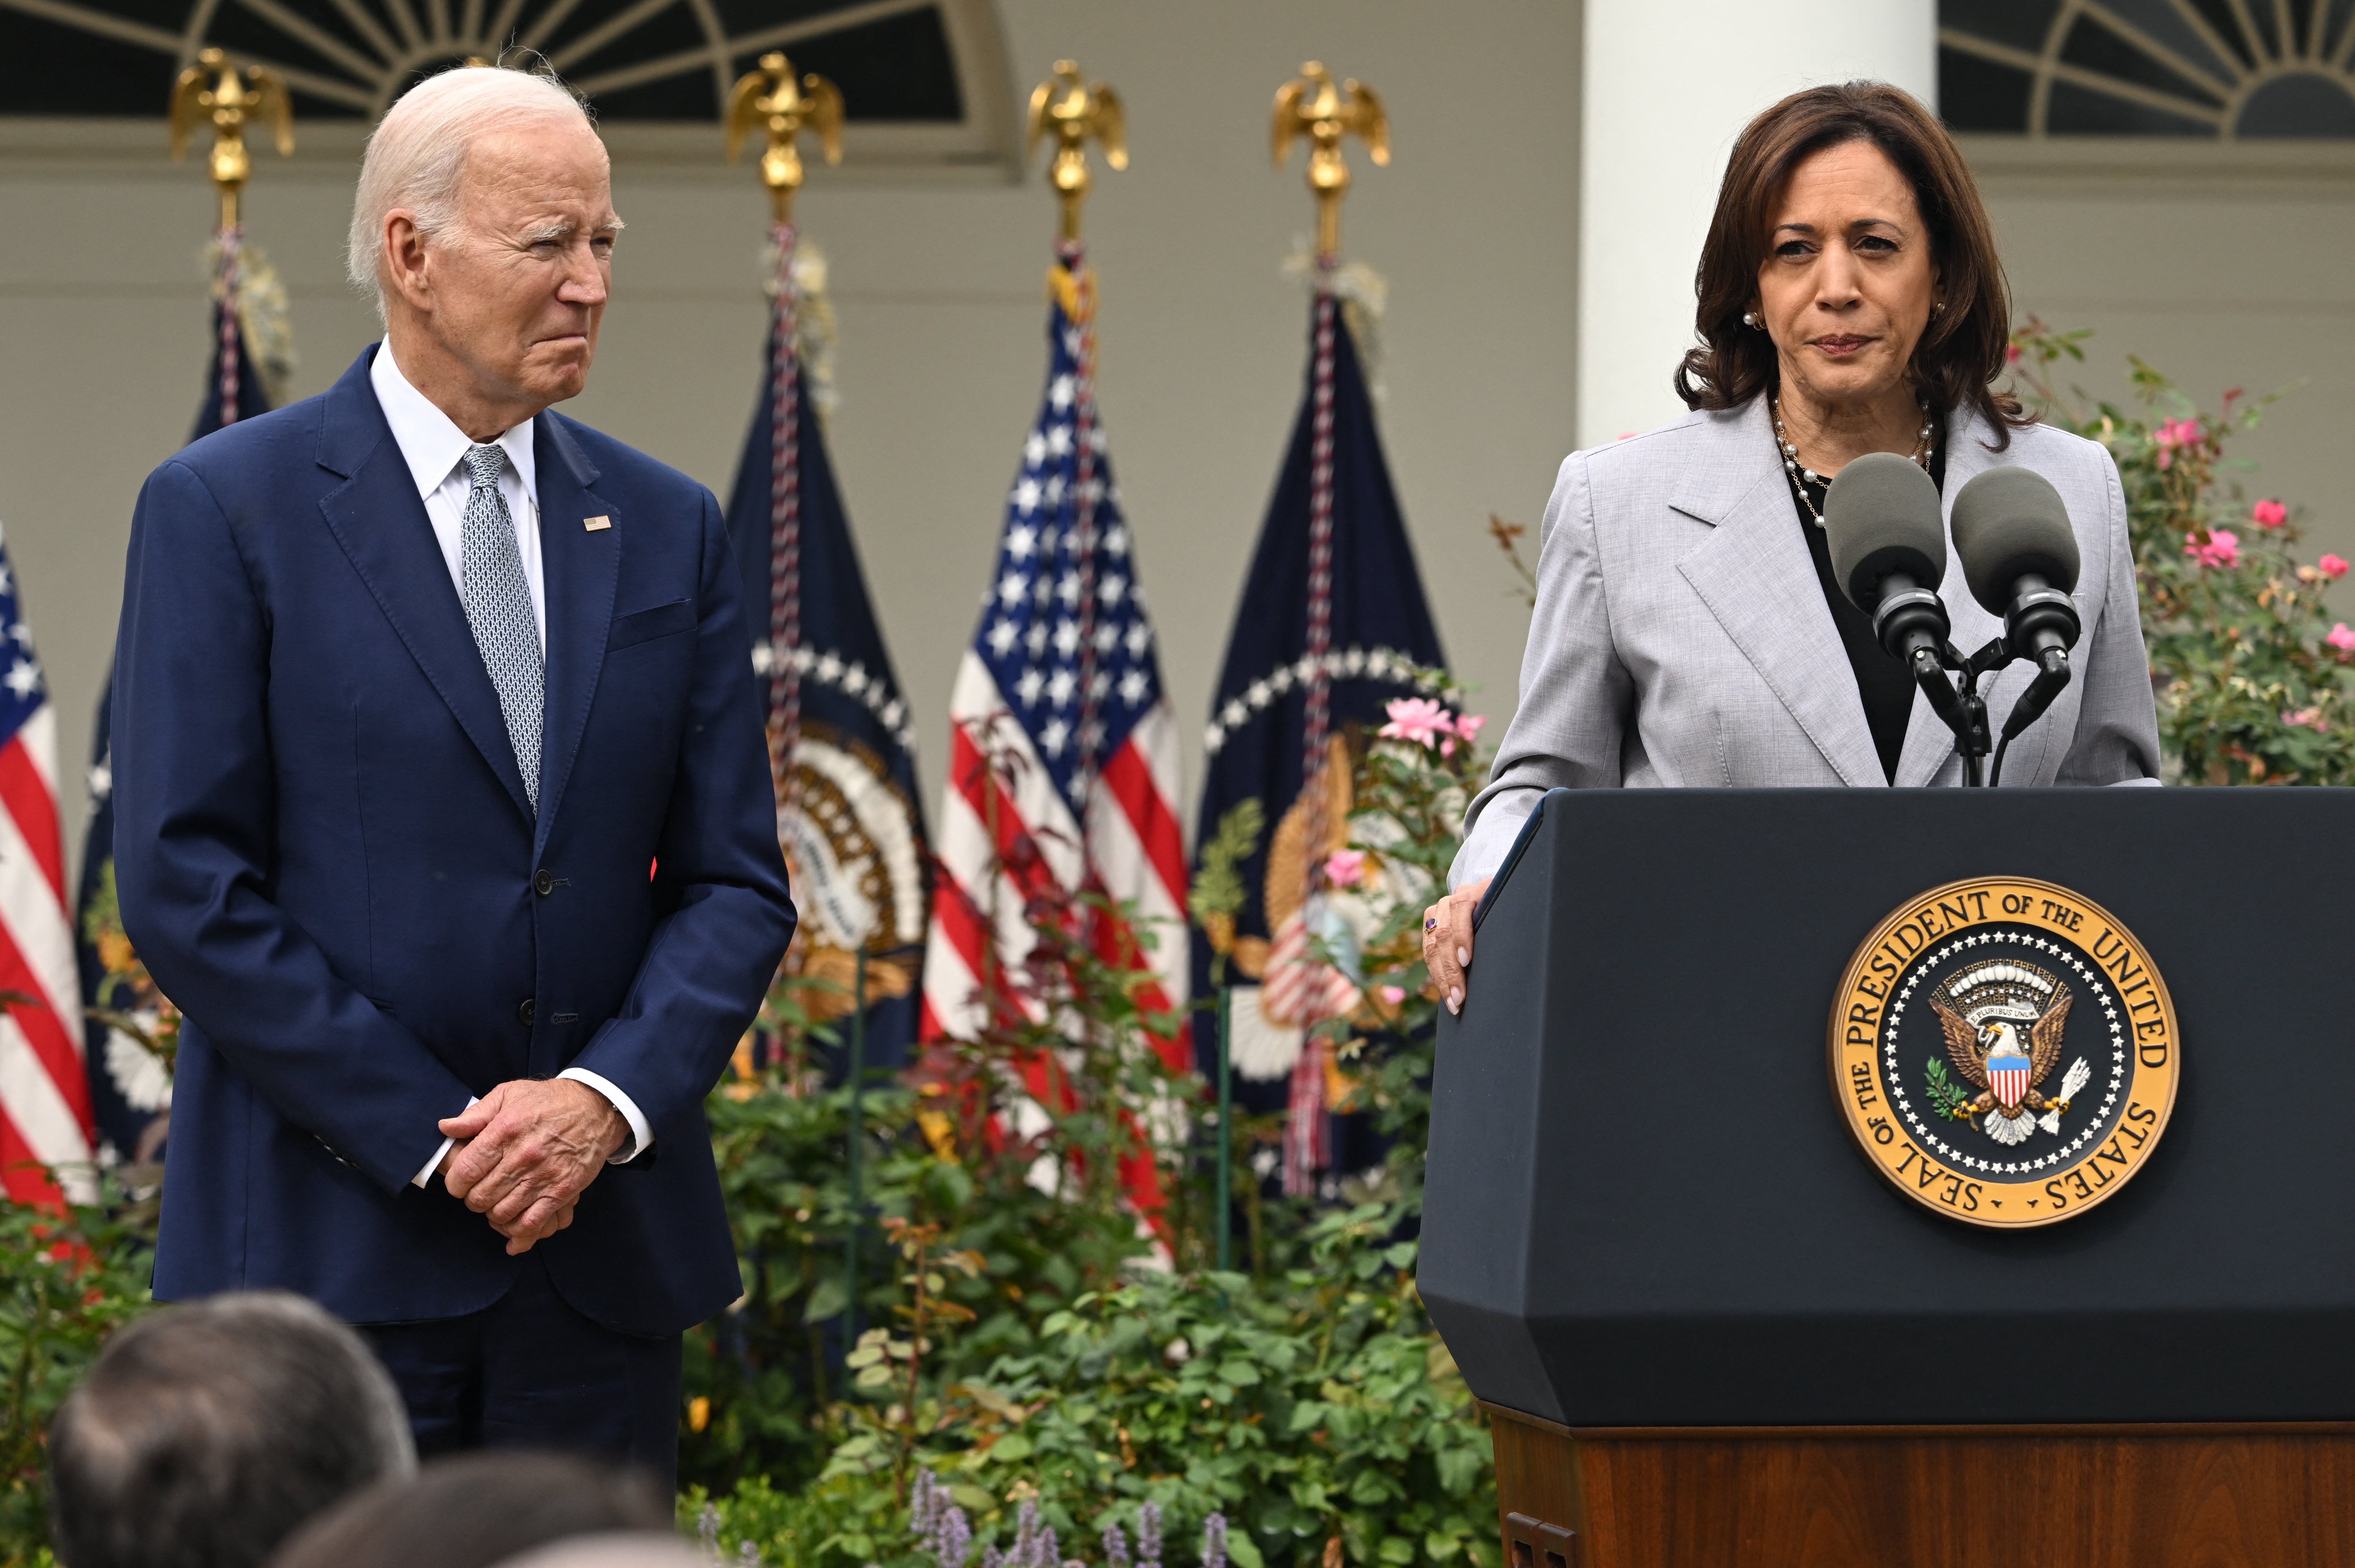 President Joe Biden and Vice President Kamala Harris hold an event at the White House in Washington, DC, on September 22.